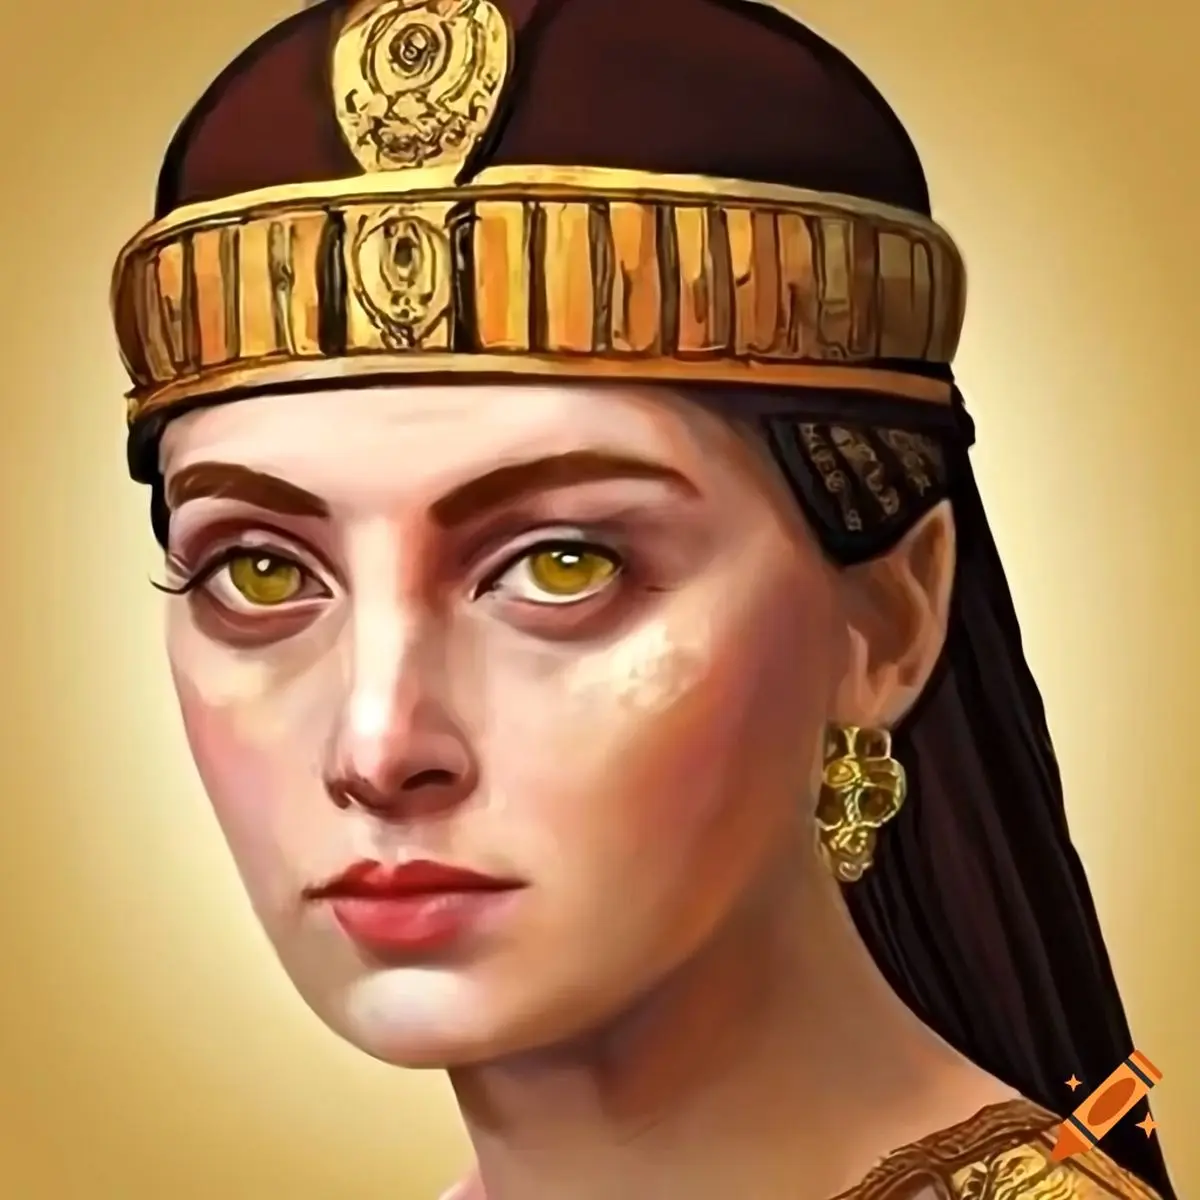 craiyon_154423_Portrait_of_a_noble_Byzantine_woman_with_tan_skin